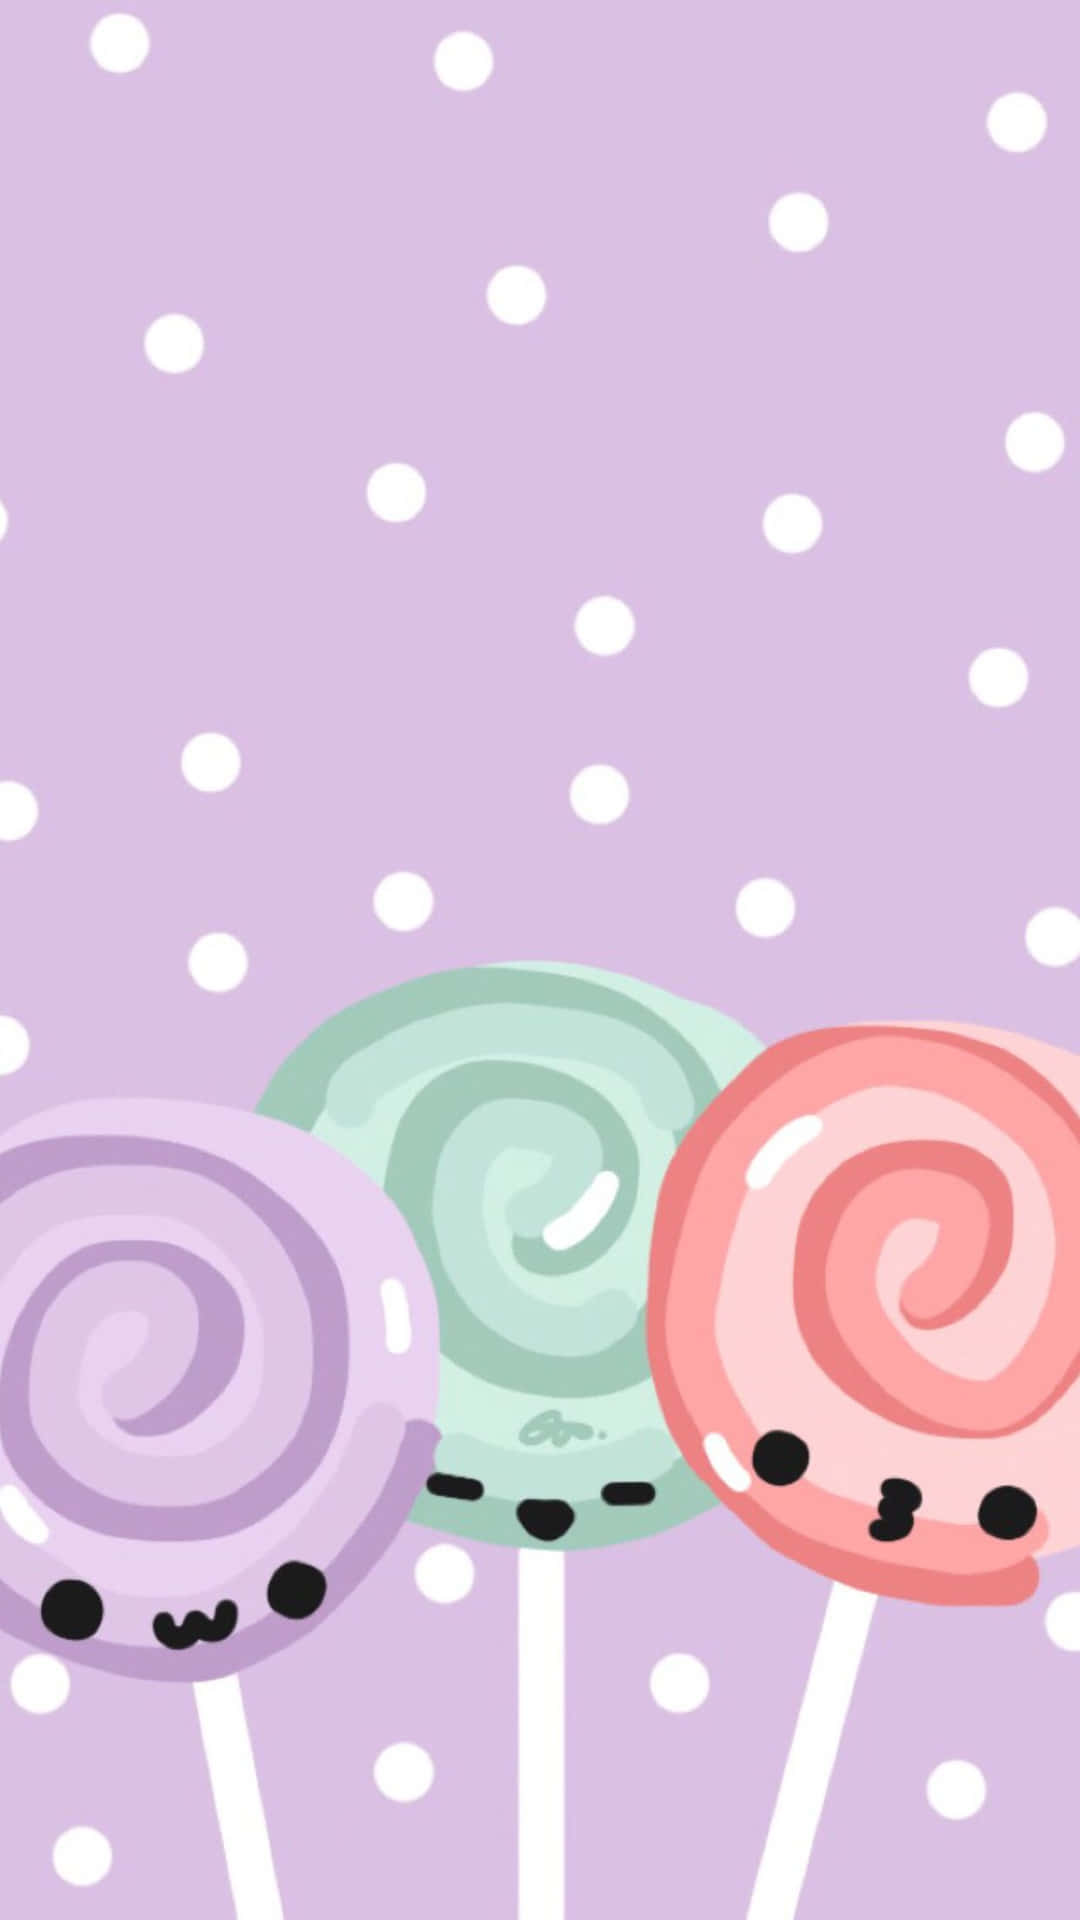  Pastel Kawaii Cat Wallpapers Full HD Wallpaper for Mobiles and Desktop  Free Download